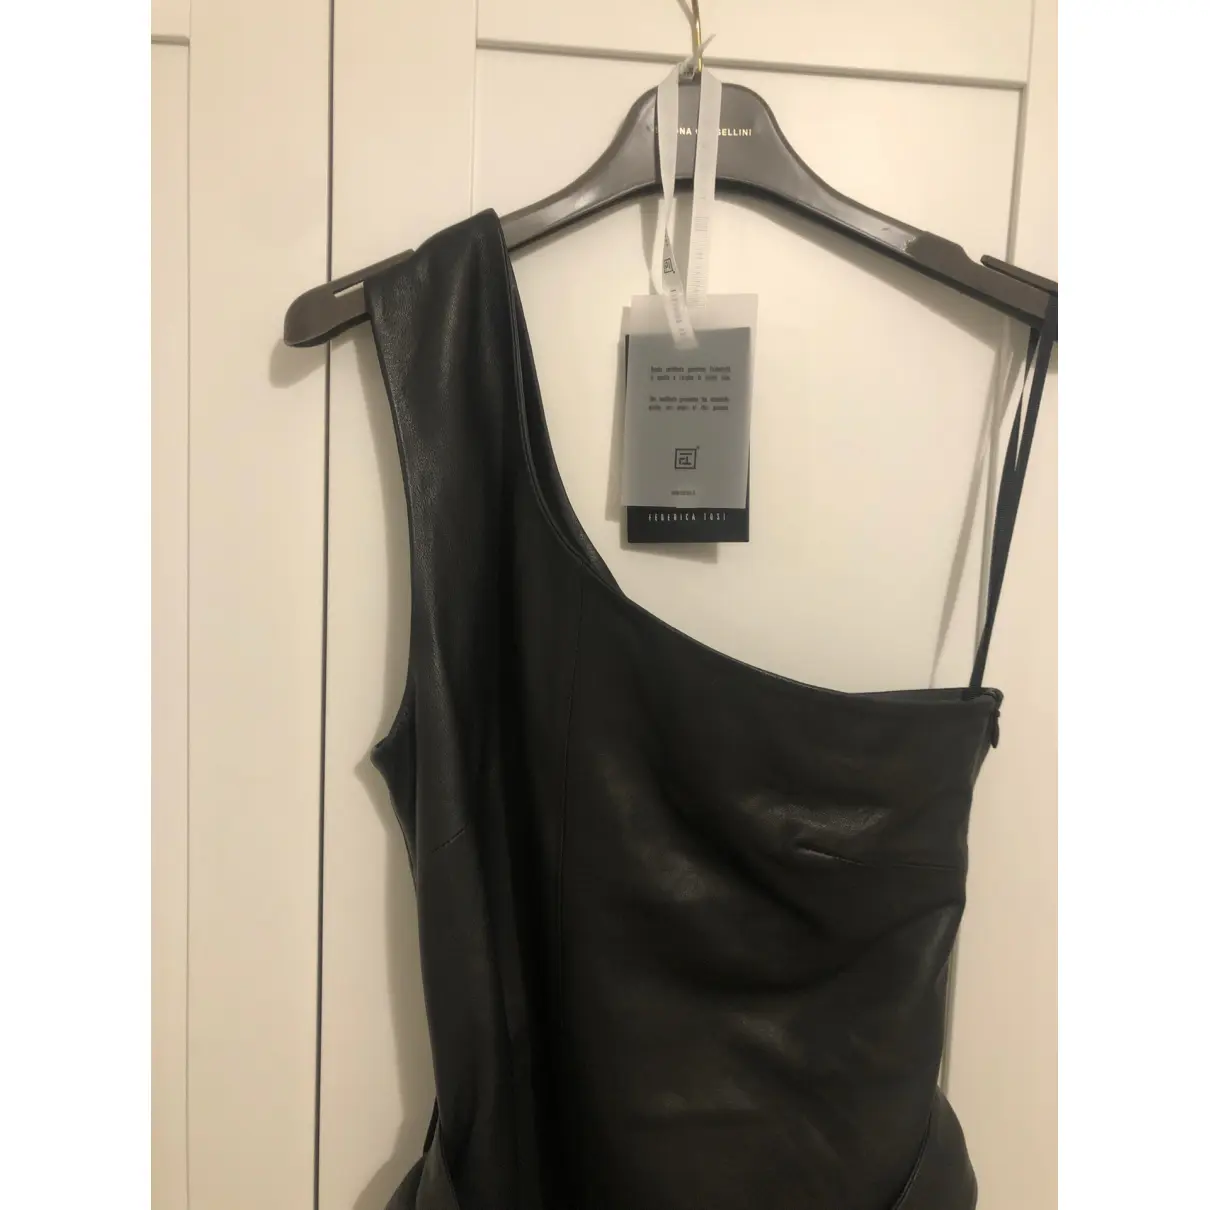 Buy Federica Tosi Leather mini dress online